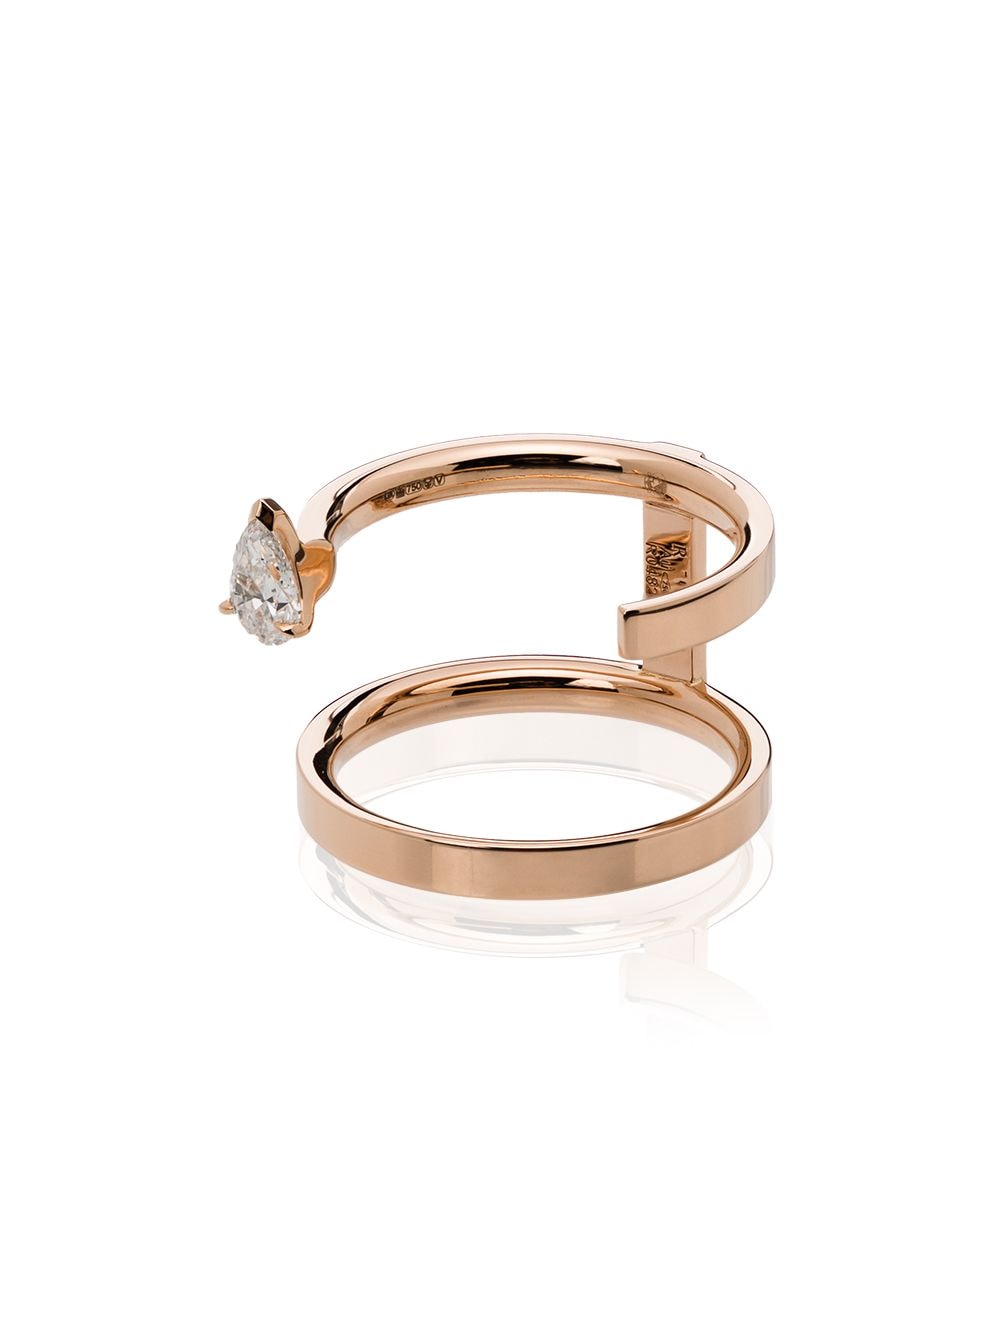 Serti Sur Vide 18kt rose gold diamond ring